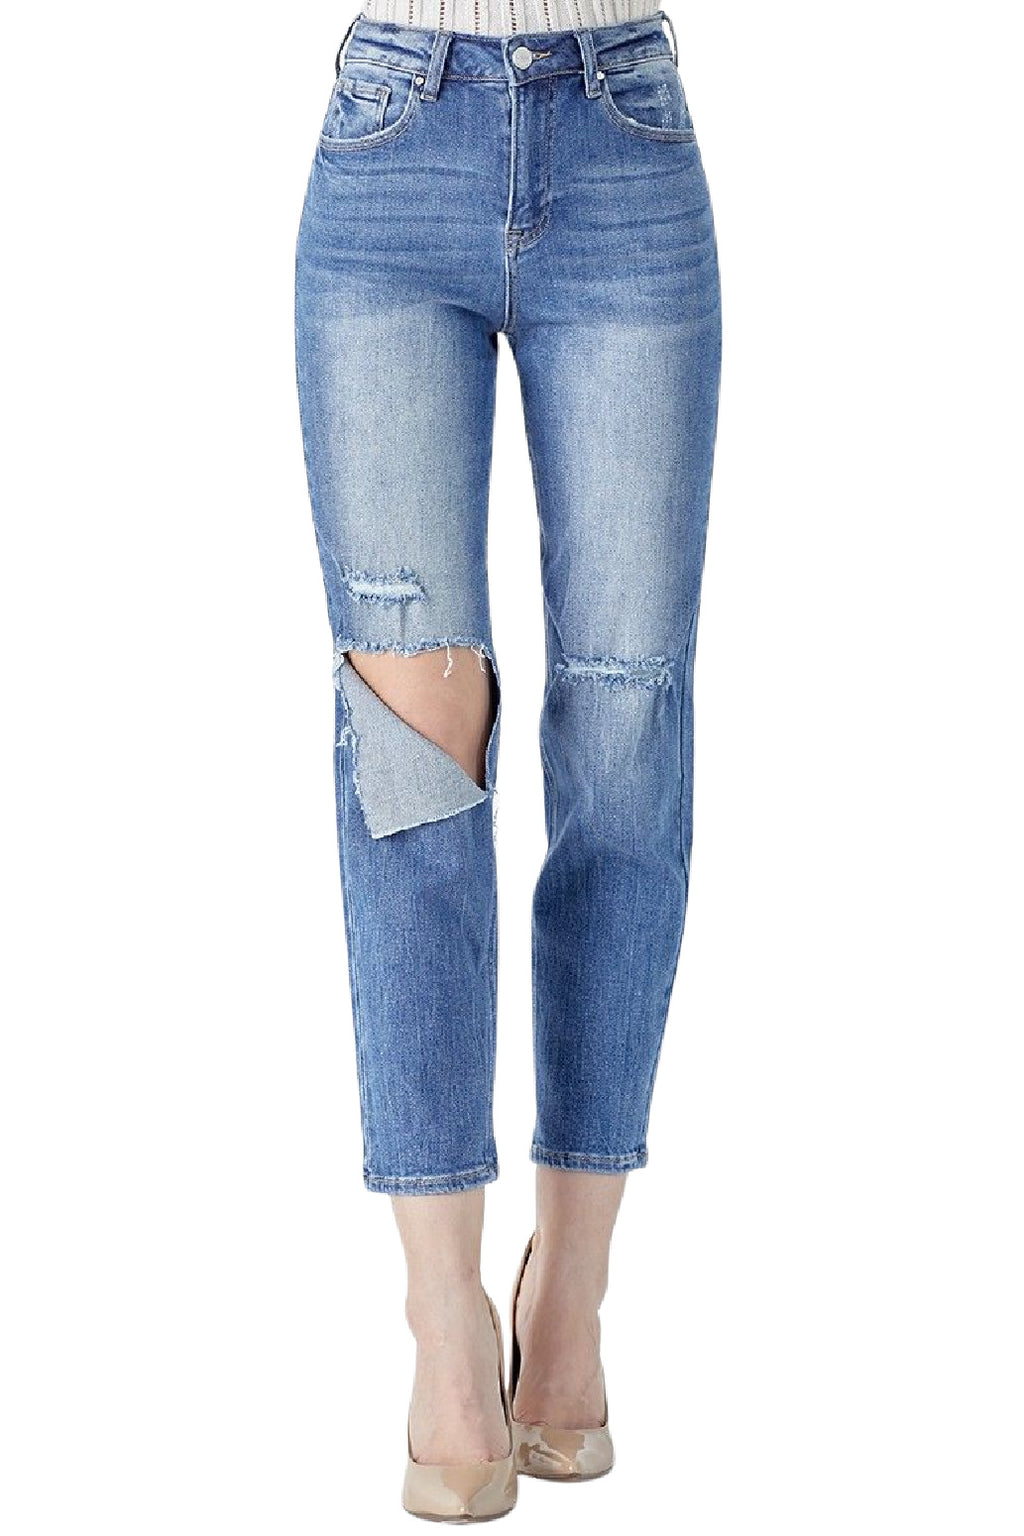 Risen Jeans > Category > #RDP1295 MEDIUM −